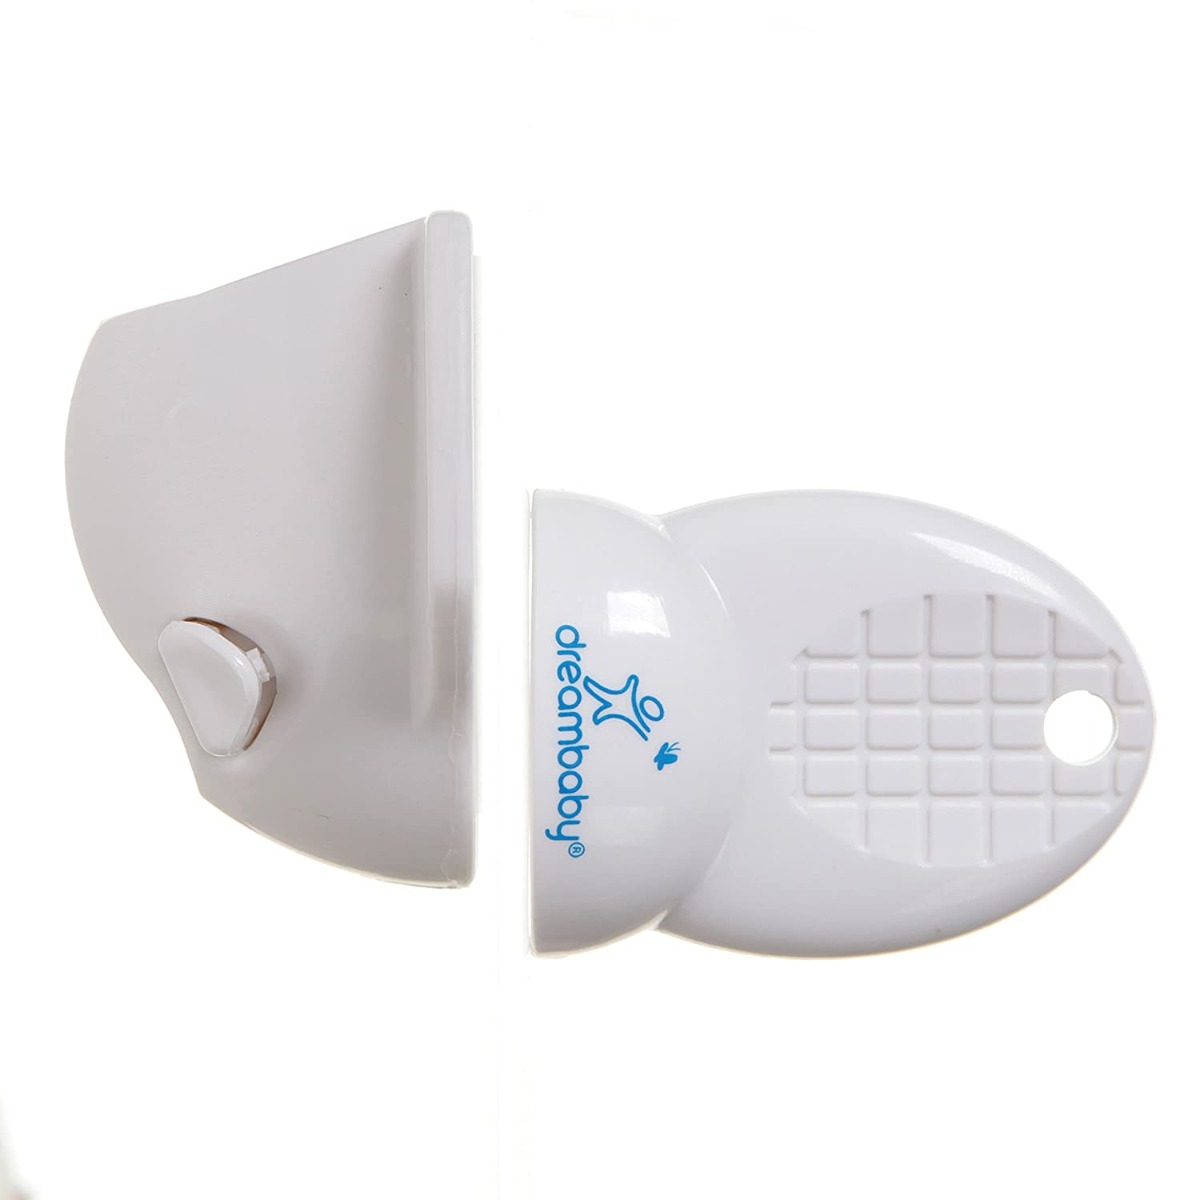 Dreambaby Adhesive Mag Locks - 8 Locks, 1 Key - White